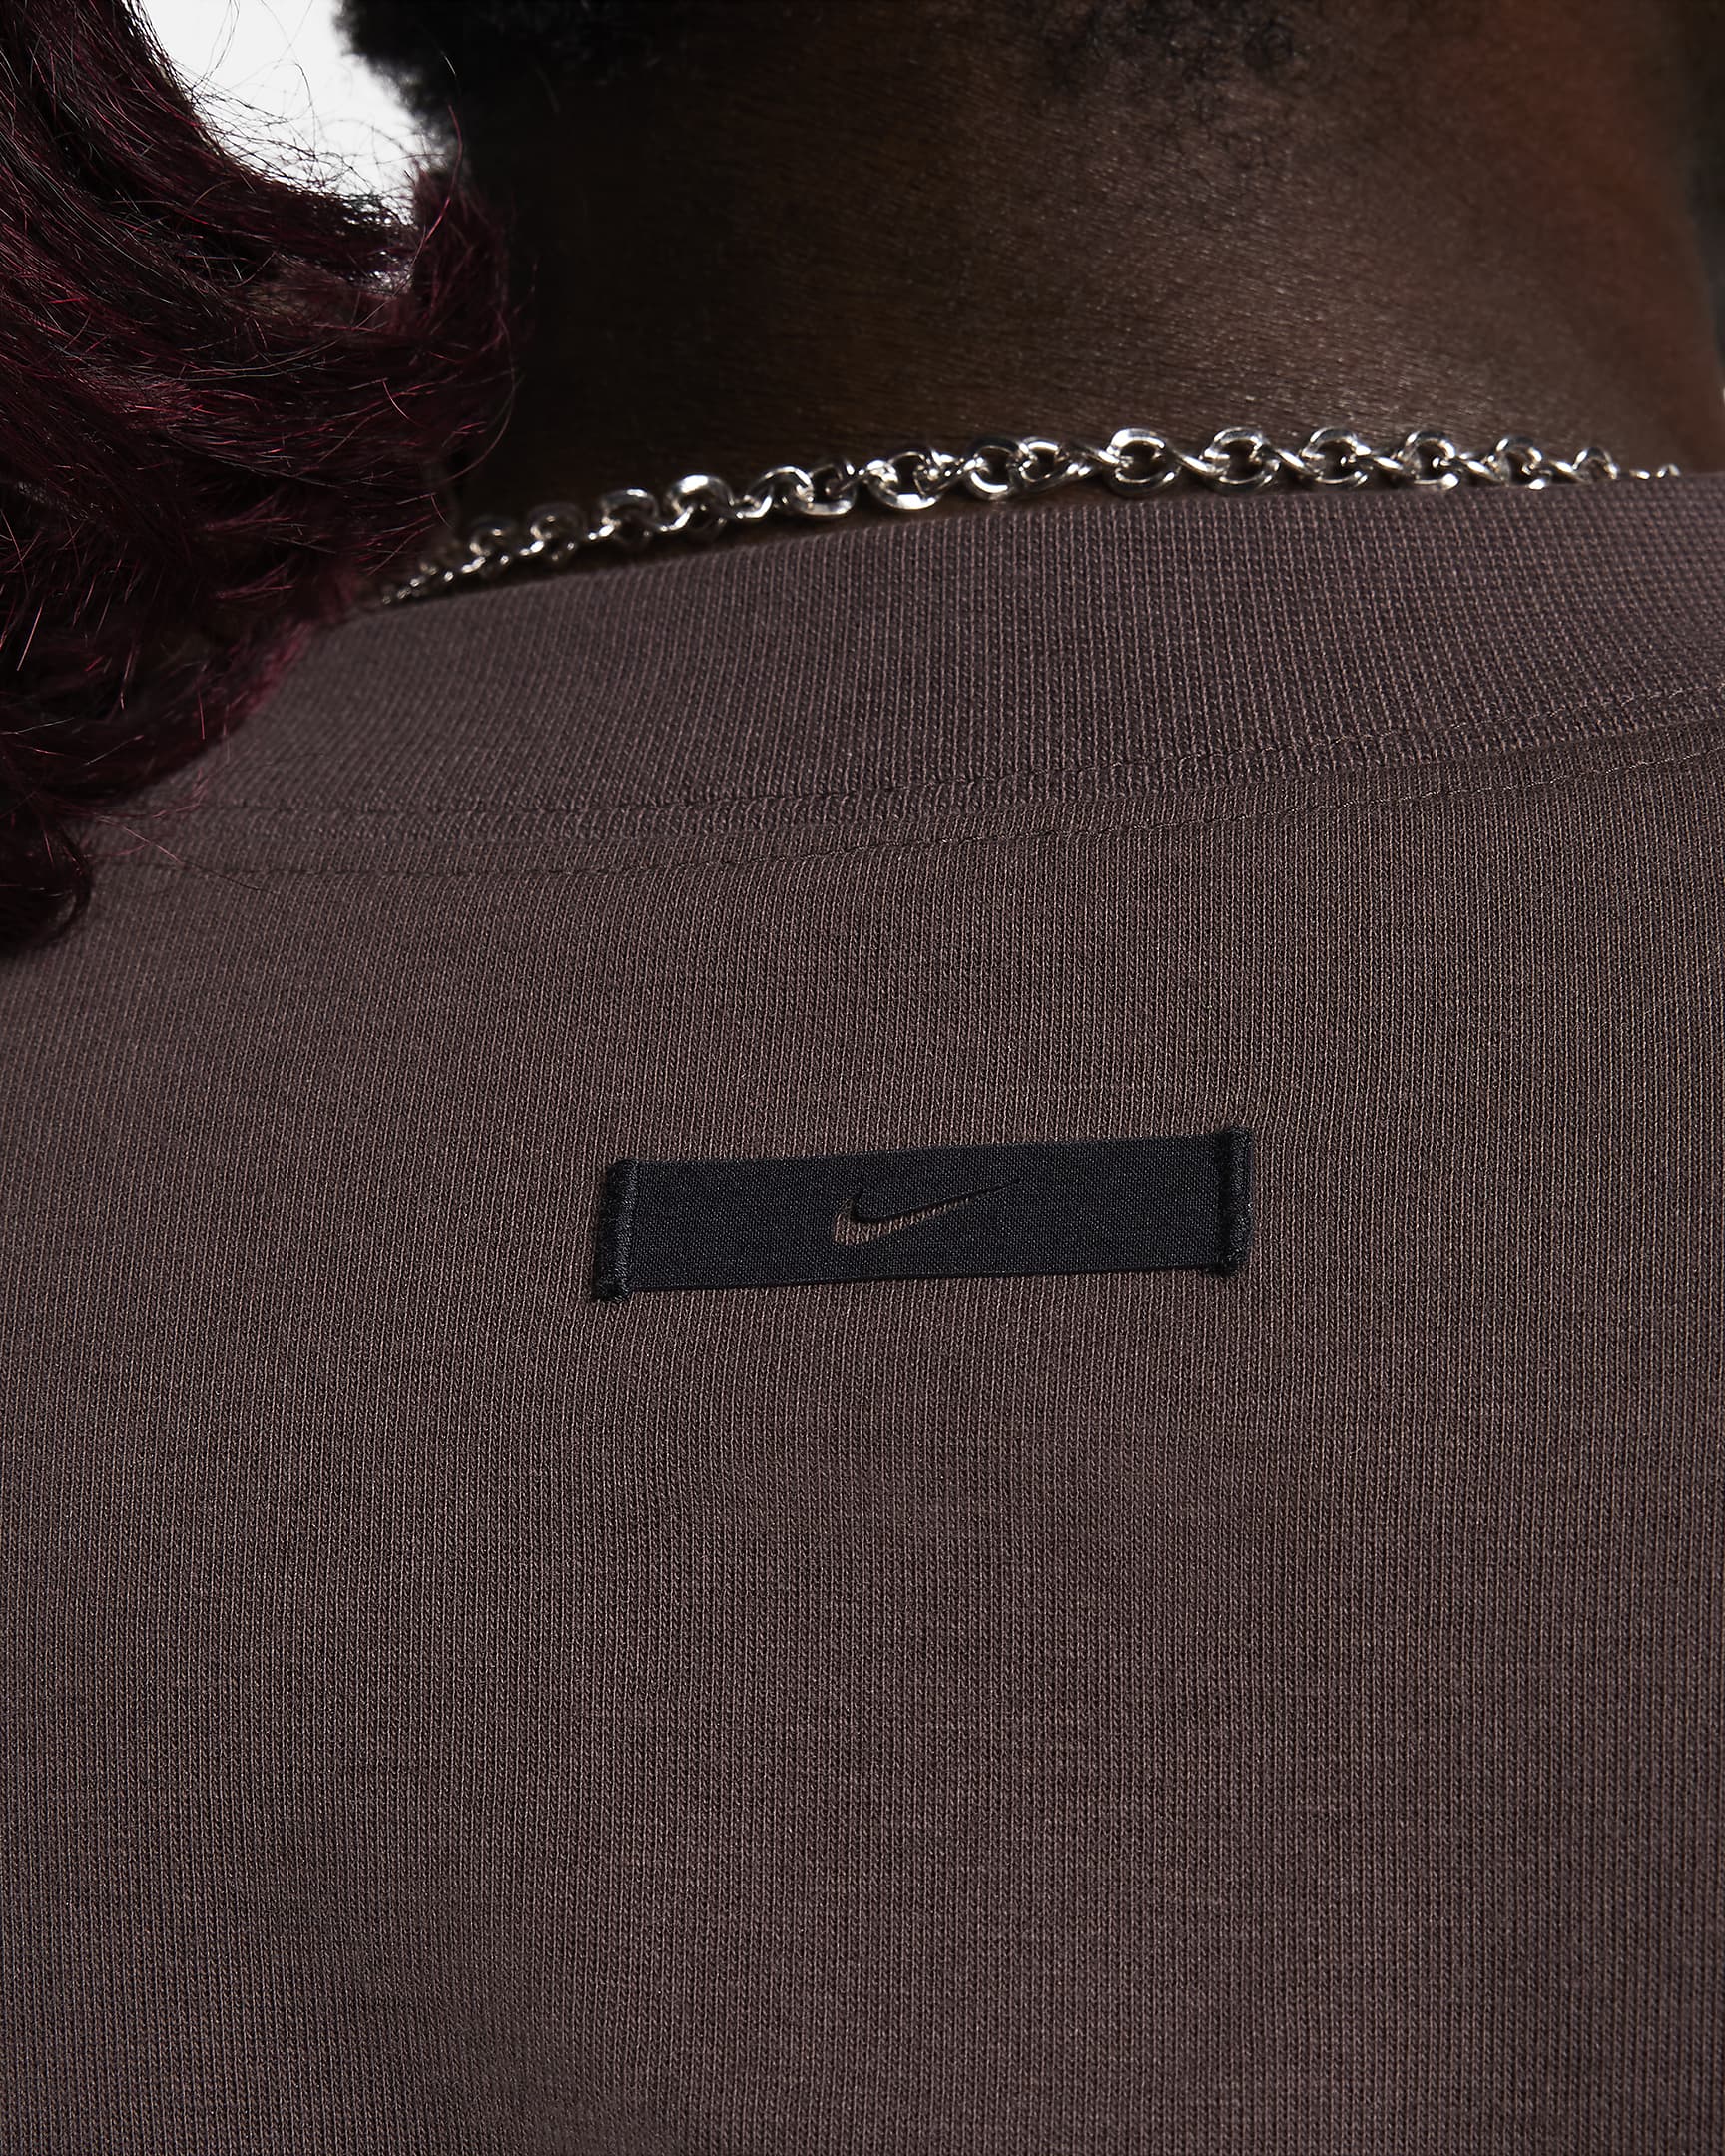 Sweat oversize à manches courtes Nike Sportswear Tech Fleece Reimagined pour homme - Baroque Brown